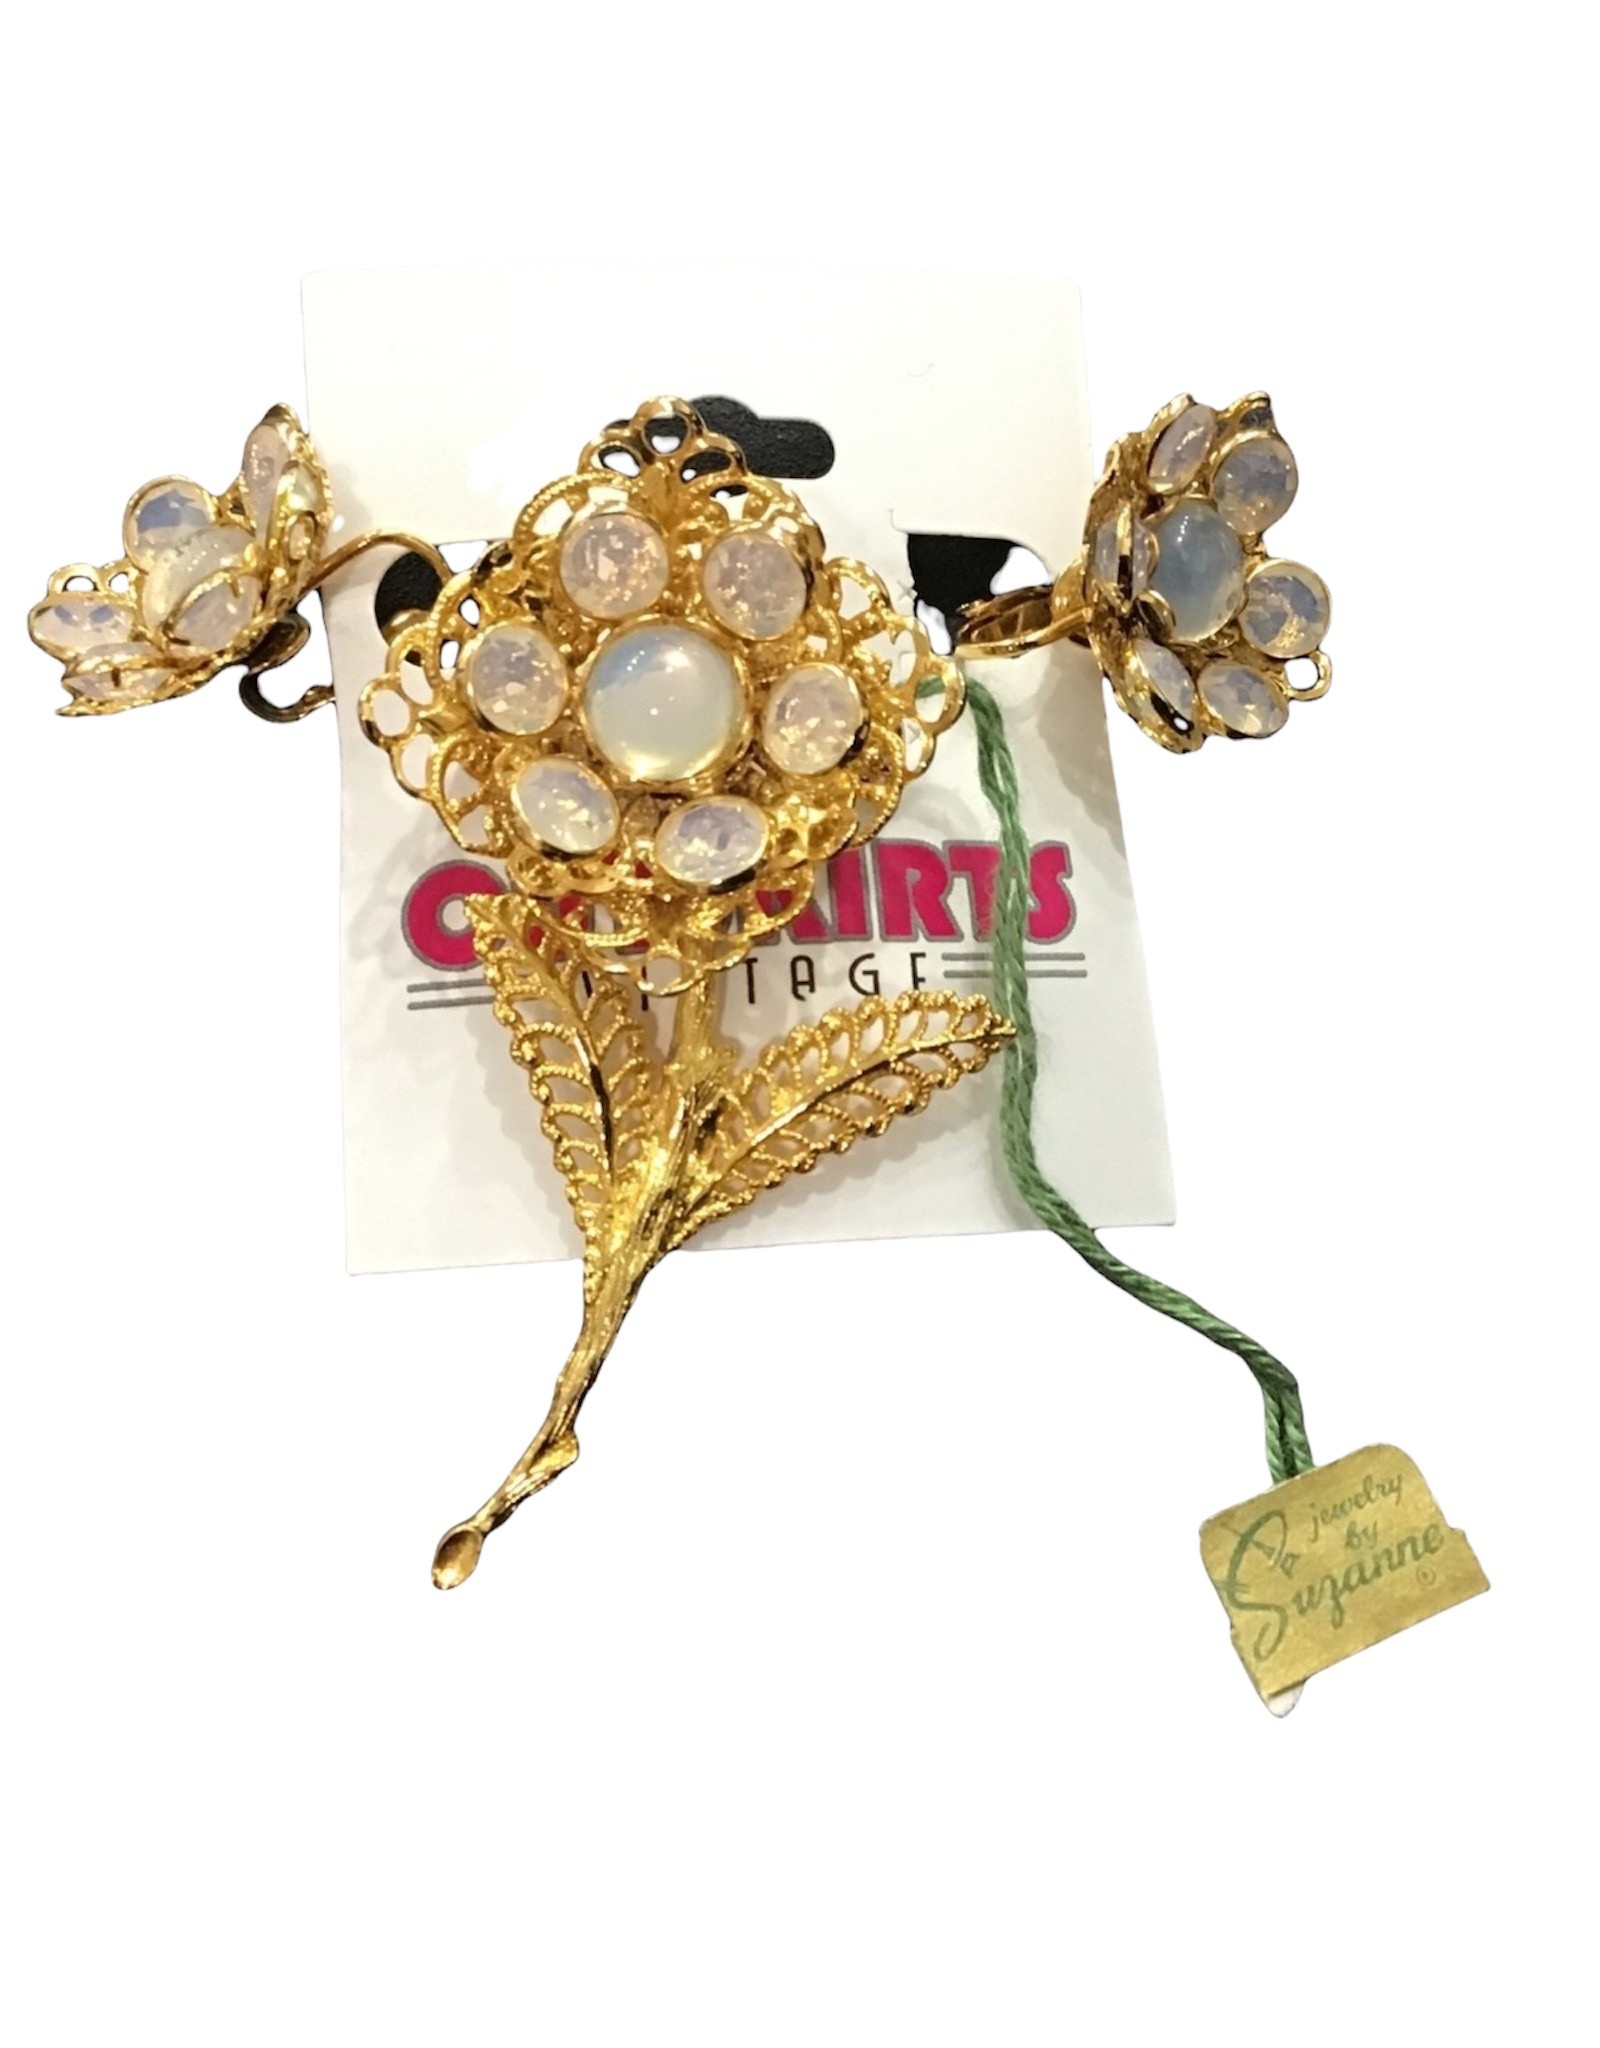 Jewelry by Suzanne opalesque/goldtone brooch & earrings